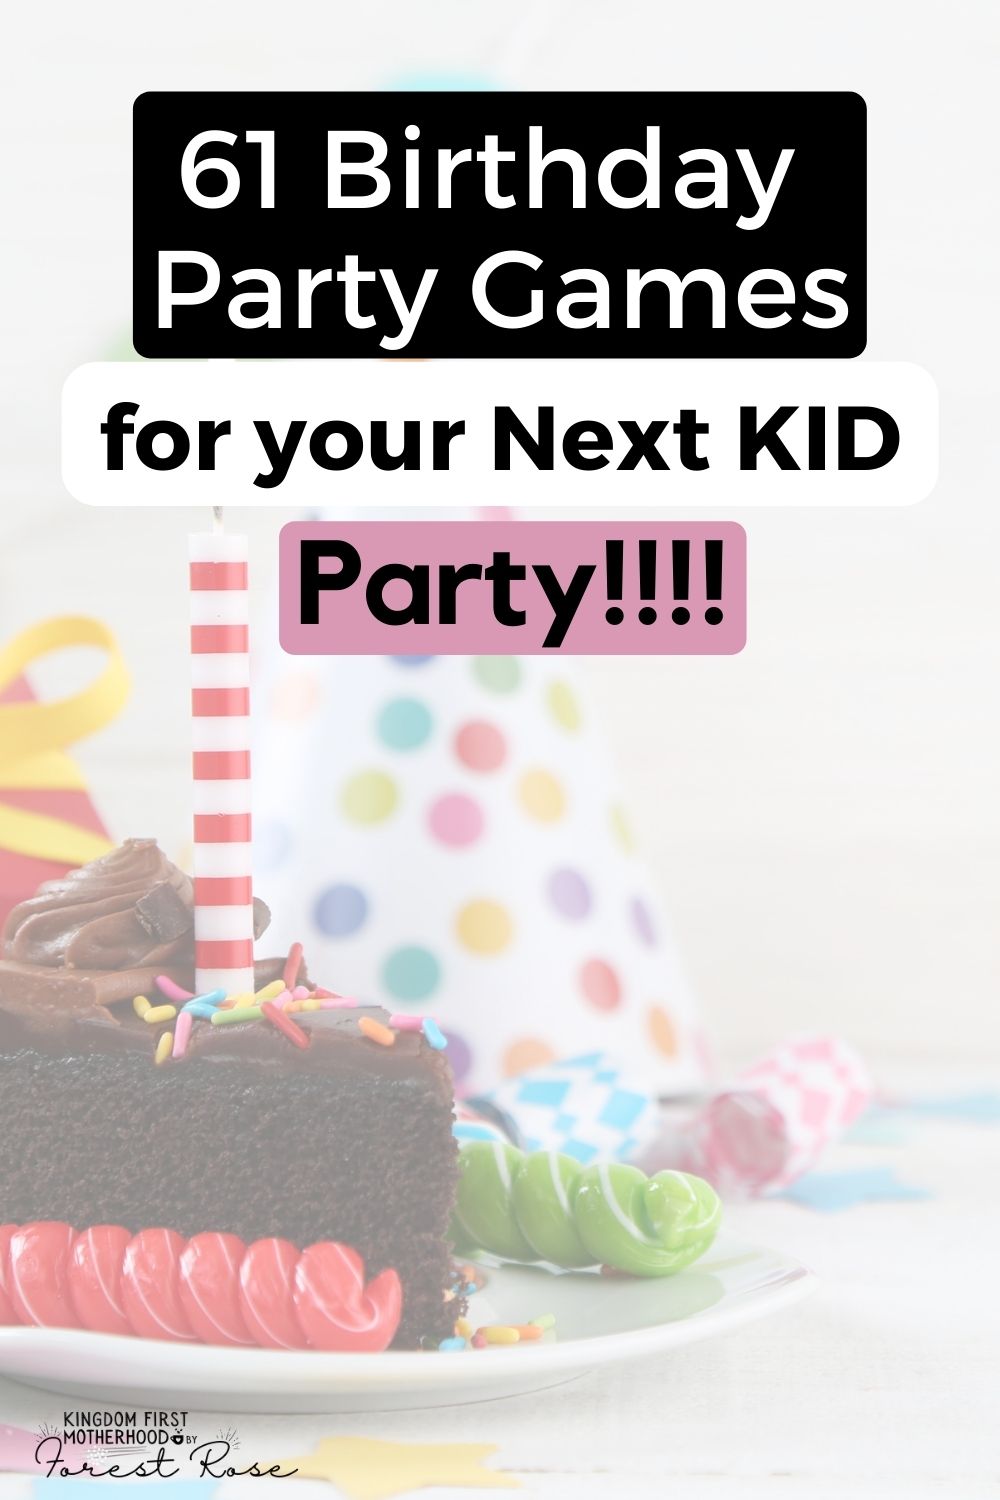 61 Birthday Party Game Ideas